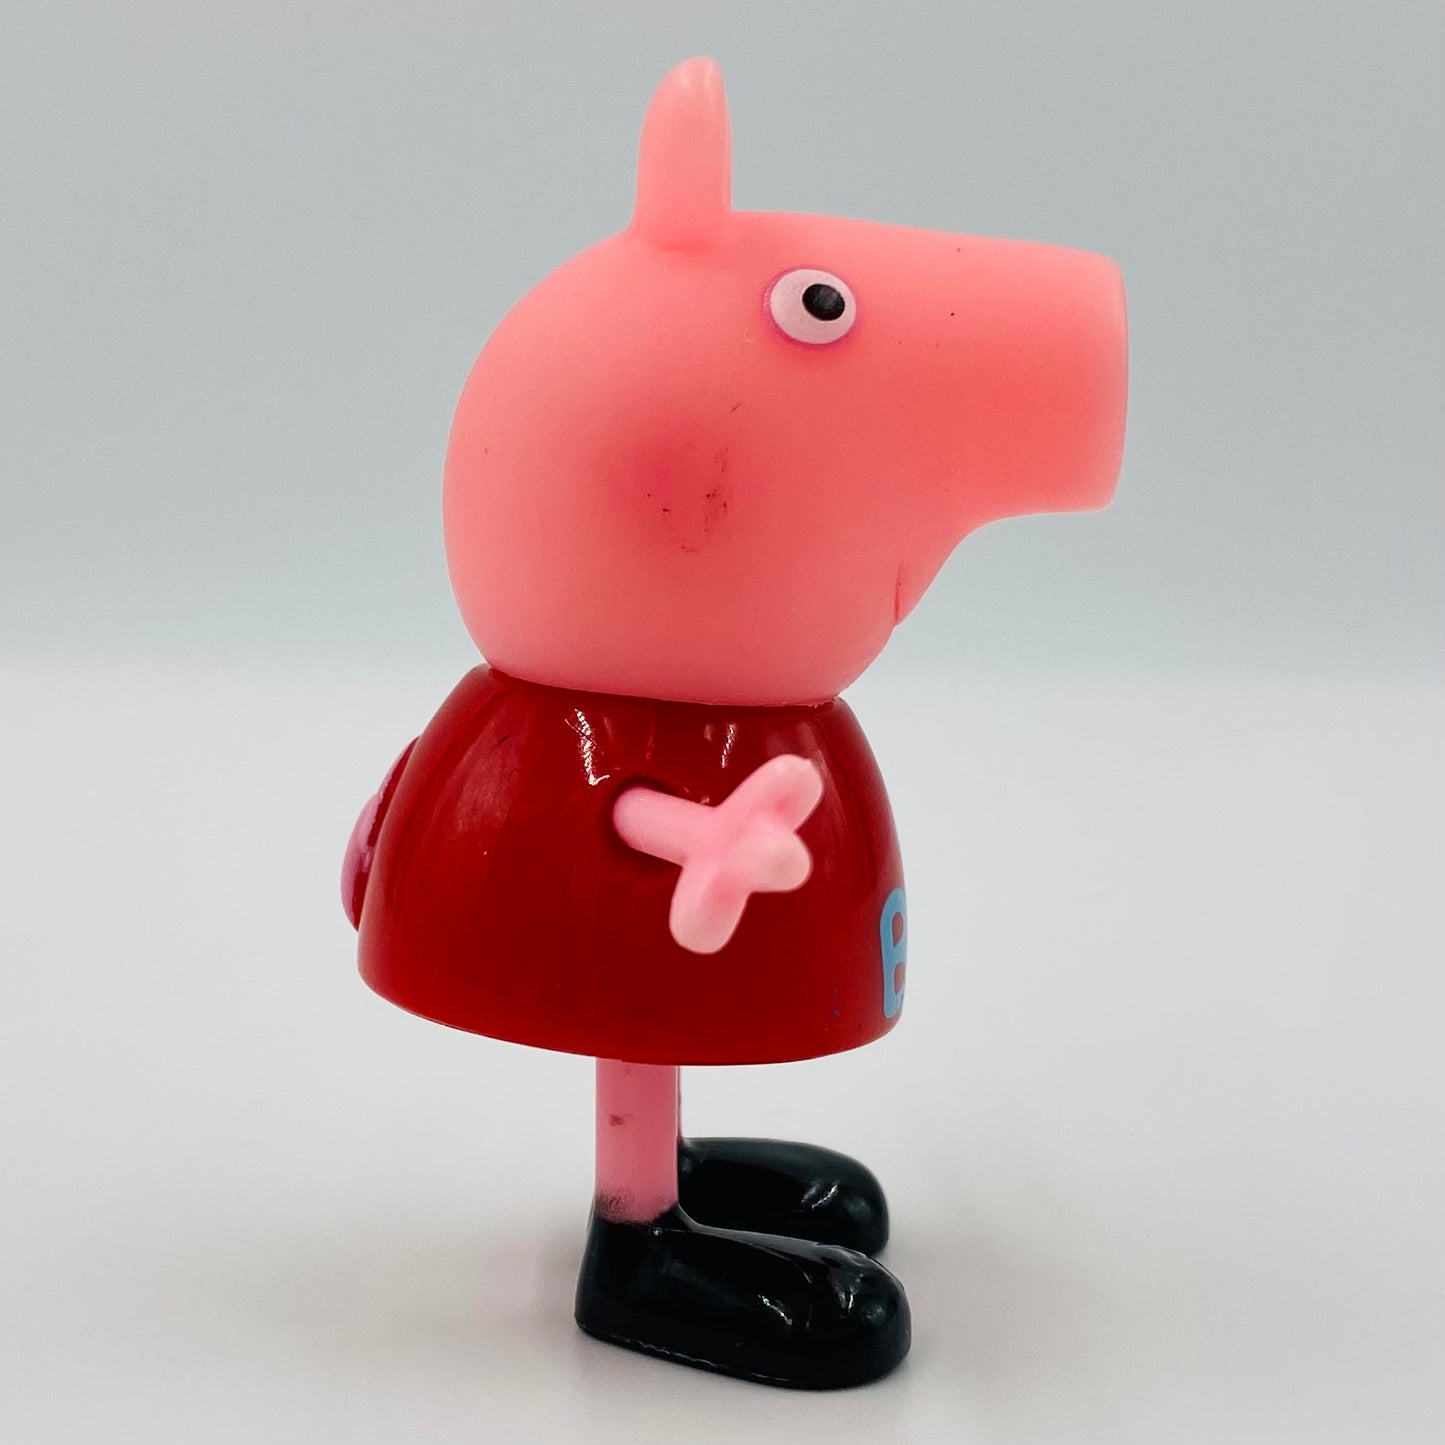 Peppa Pig (ABC dress) loose 3” mini figure (2003) Jazwares